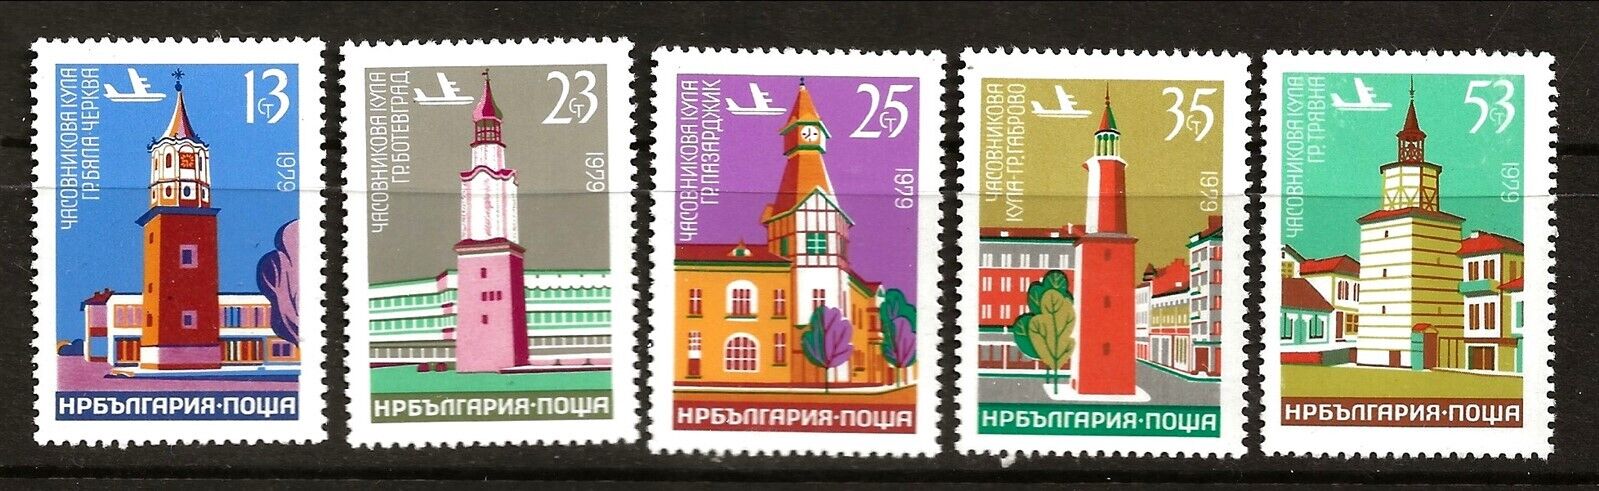 Bulgaria Sc C137-41 Nh Issue Of 1979 - Buildigs